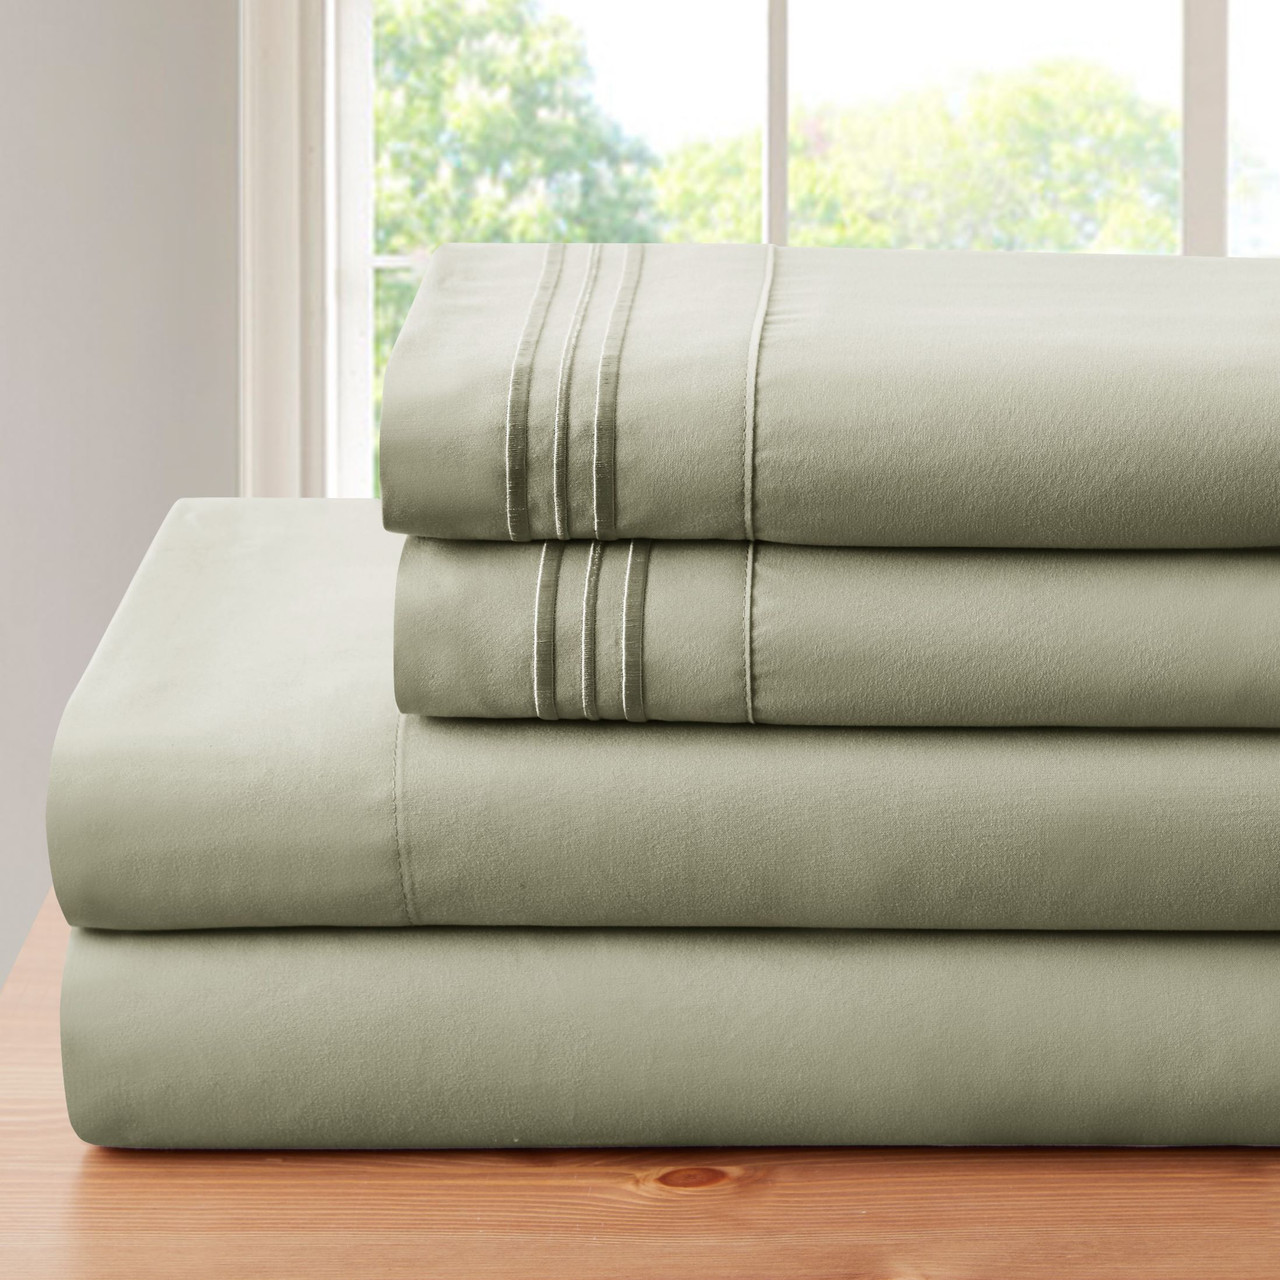 Bamboo Comfort® 3-Line Bamboo Sheet Set product image